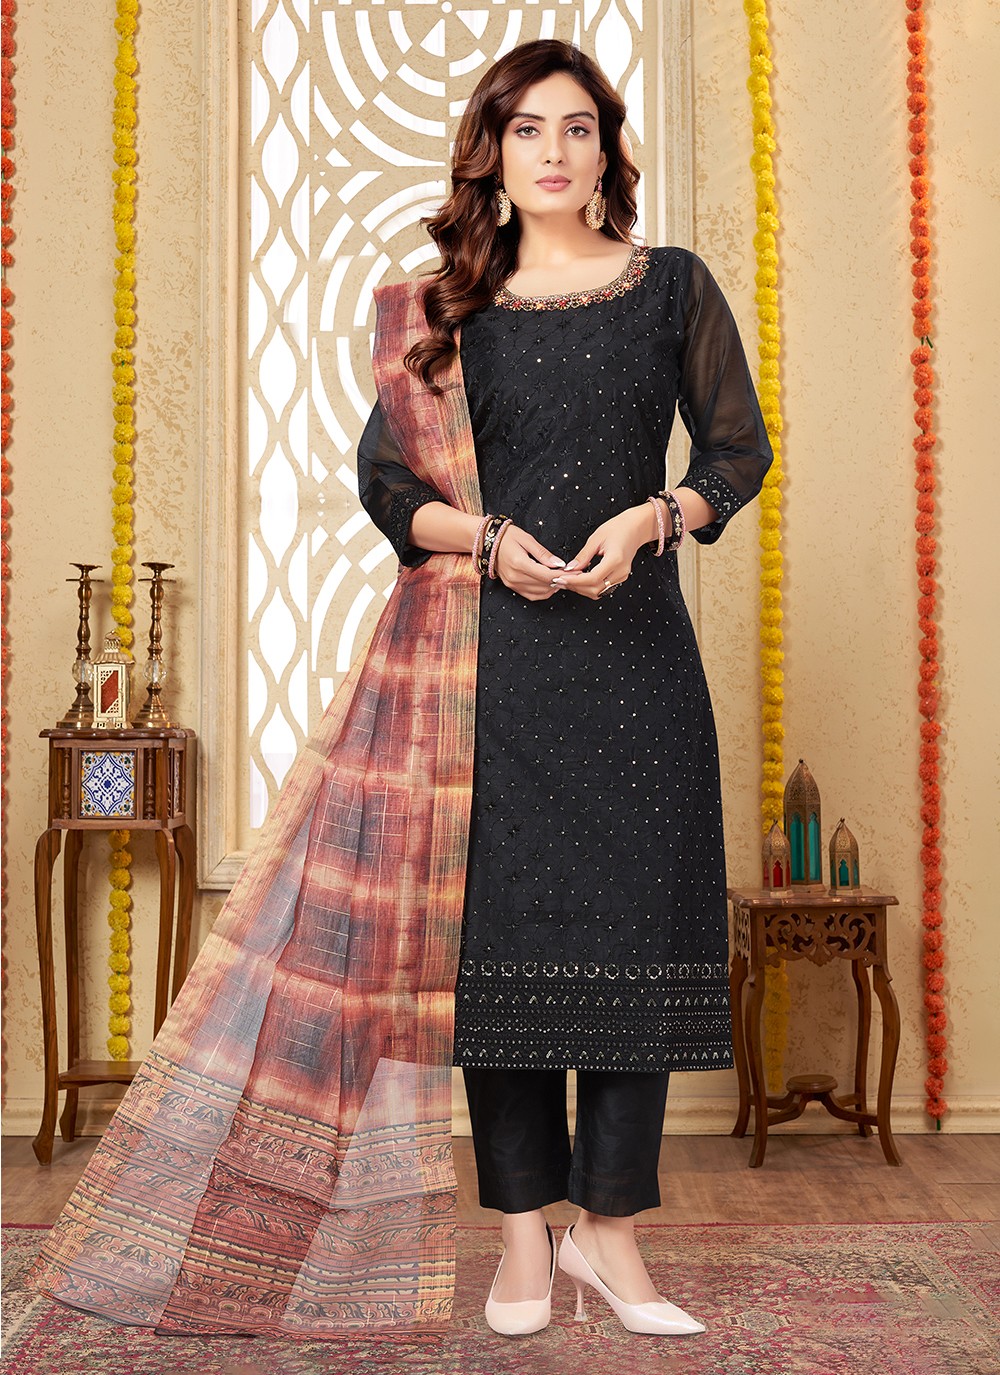 Atasi Women's Designer Anarkali Black Salwar Suit Ethnic Indian Cotton Dress-22  - Walmart.com